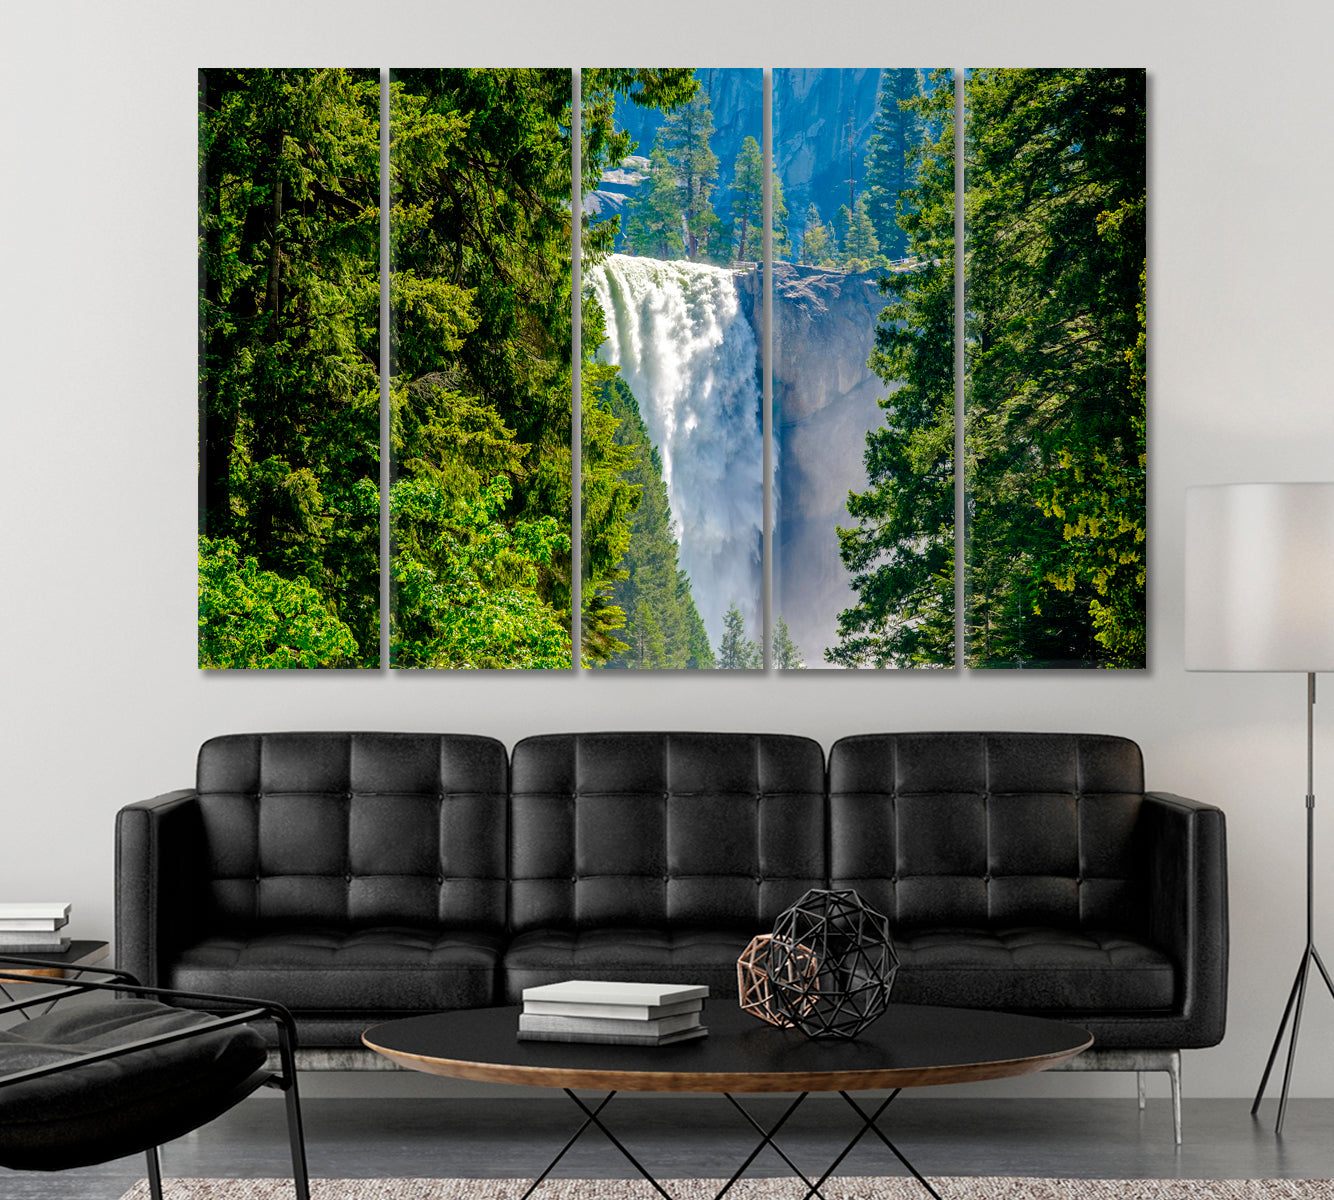 WATERFALL Vernal Falls Yosemite National Park California USA Nature Wall Canvas Print Artesty 5 panels 36" x 24" 